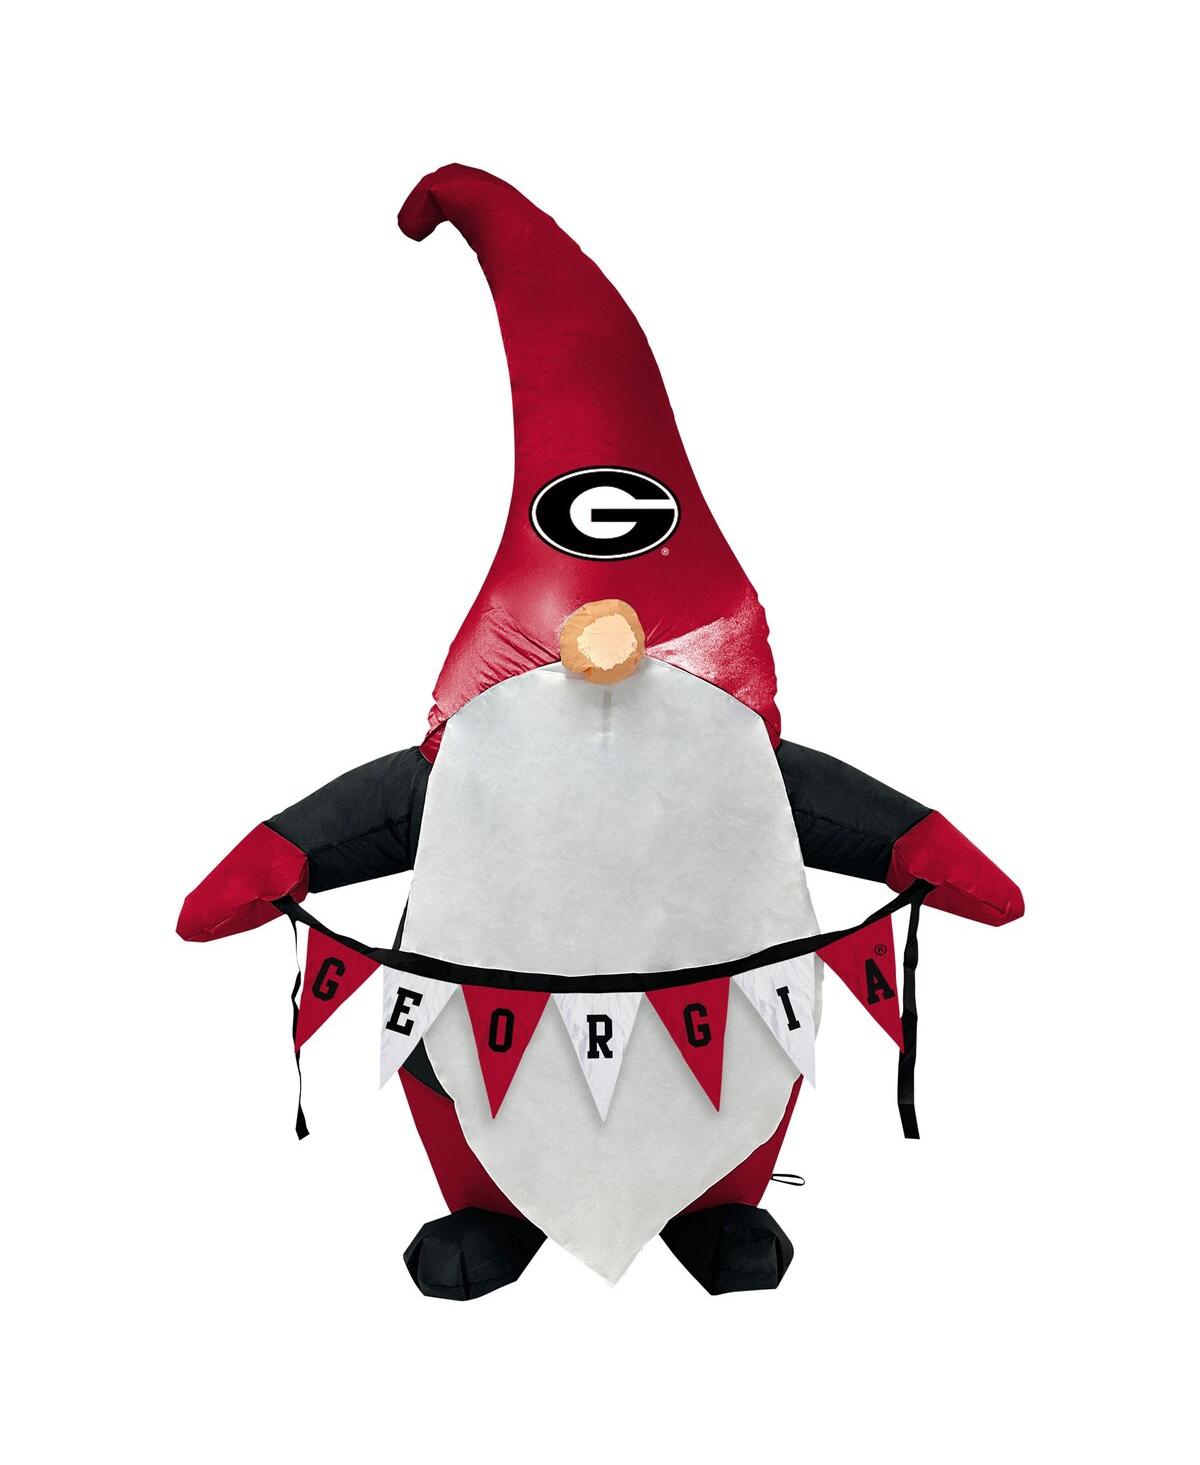 Georgia Bulldogs Inflatable Gnome - Red, White